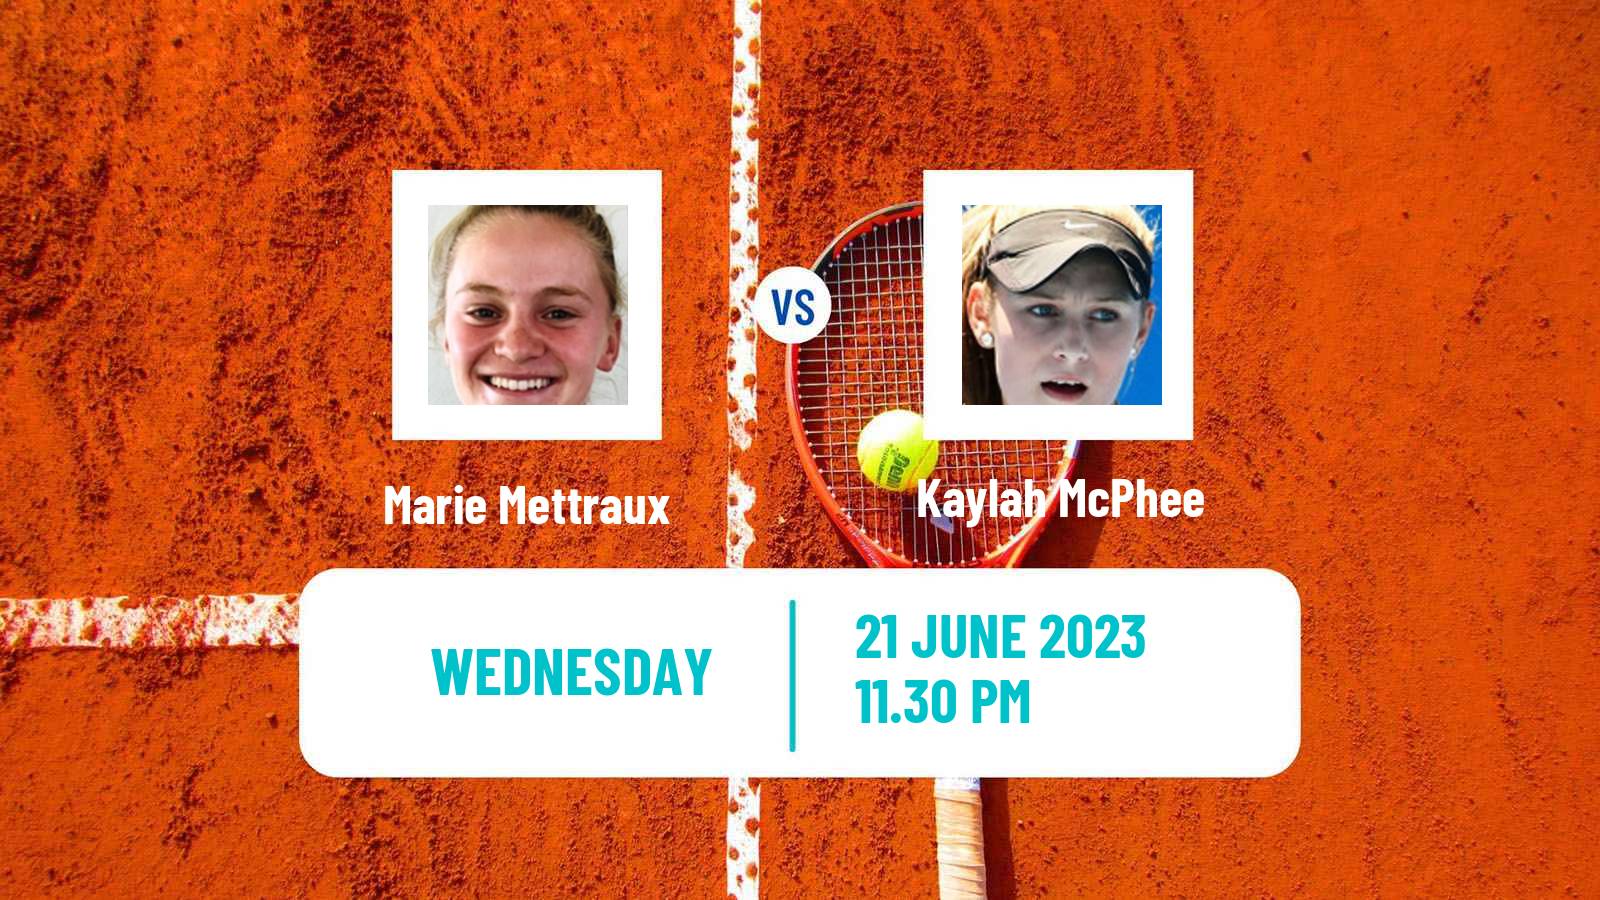 Tennis ITF W25 Tainan 2 Women Marie Mettraux - Kaylah McPhee